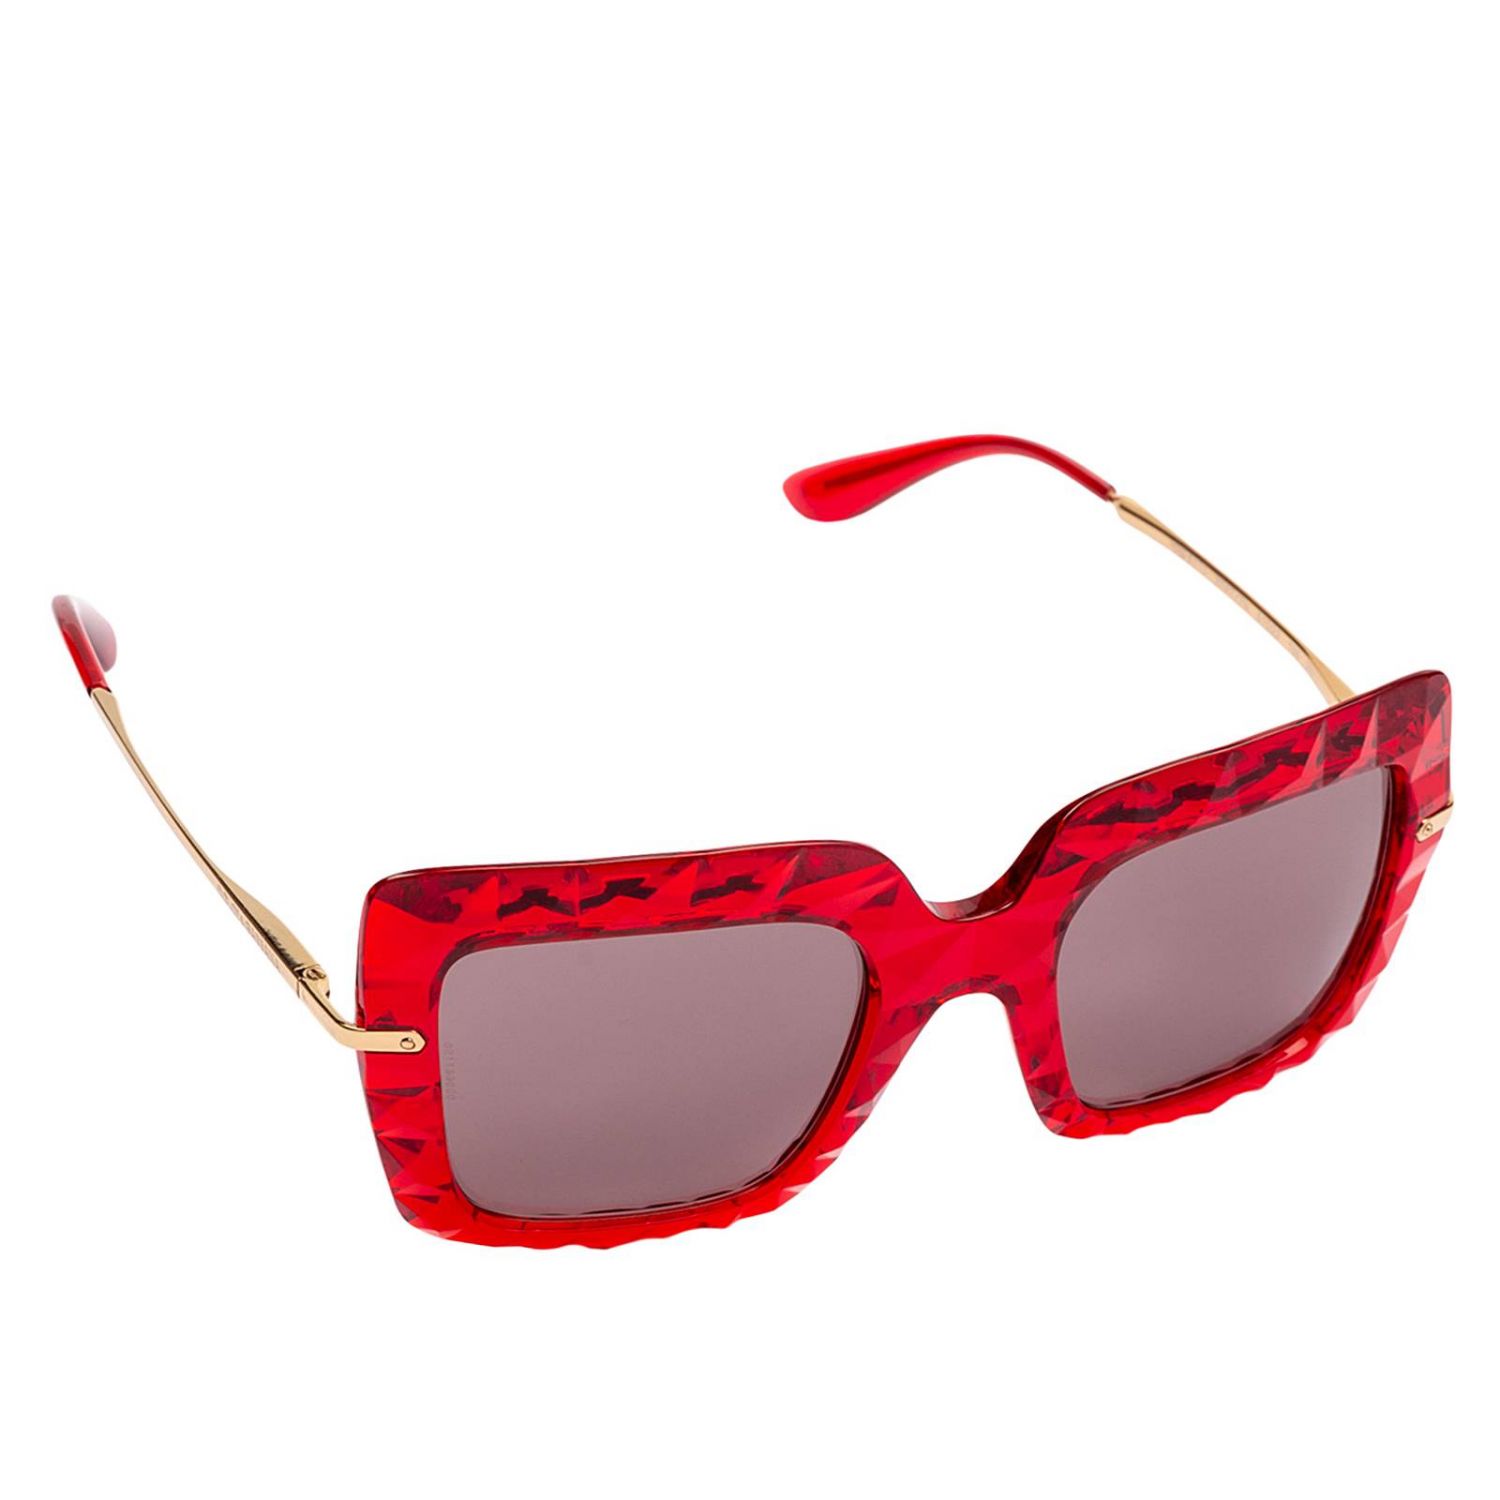 dolce gabbana sunglasses red